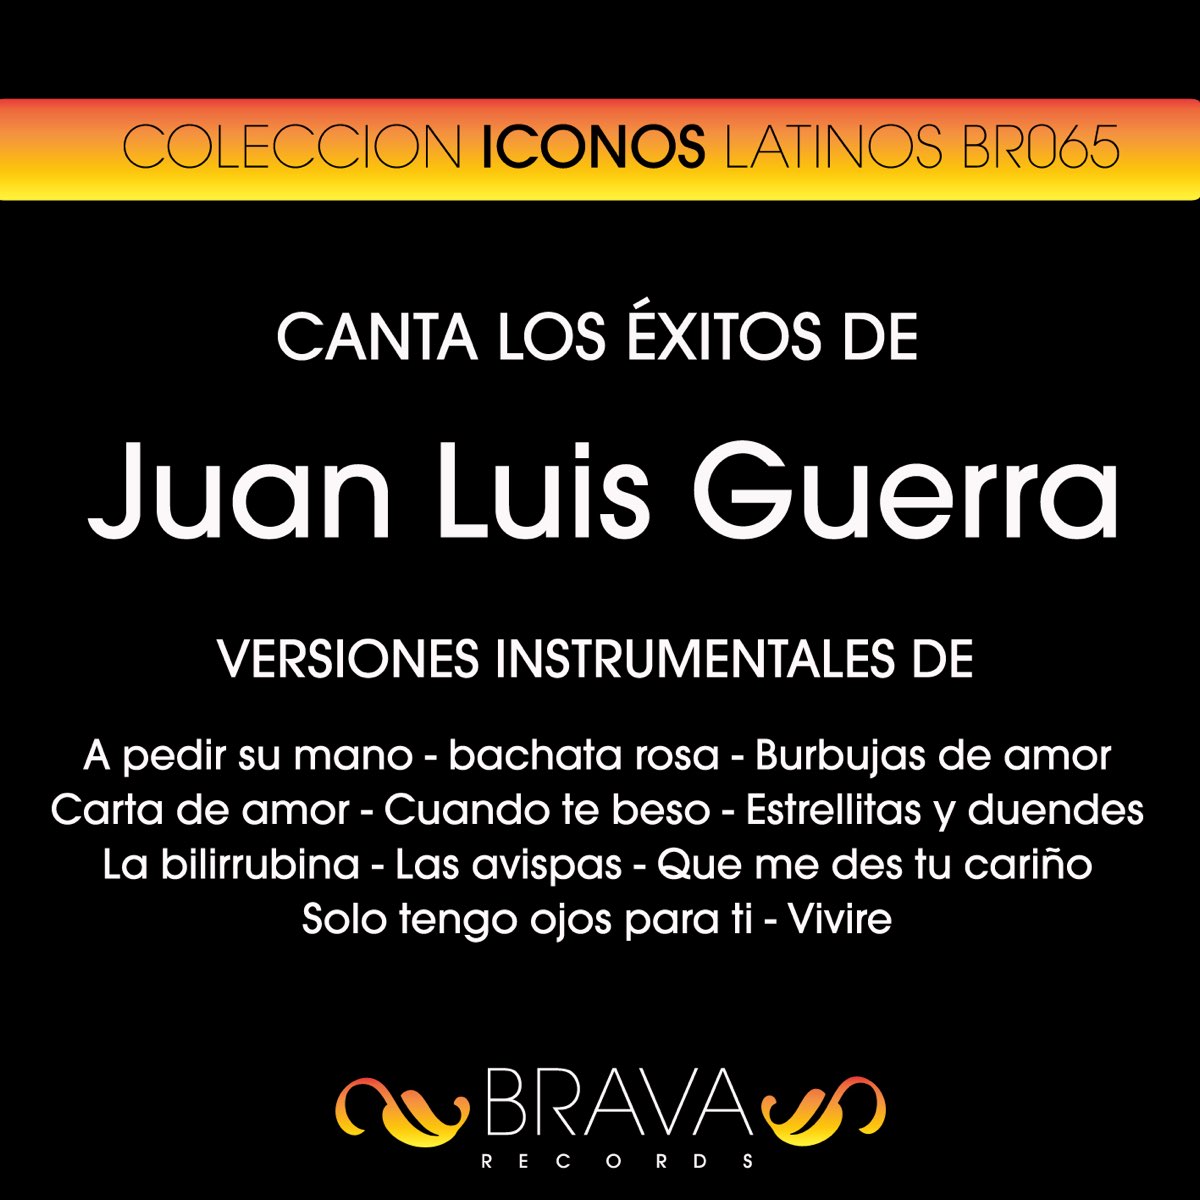 Canta Los Éxitos de Juan Luis Guerra (Instrumental Backing Tracks) - Album  by Brava HitMakers - Apple Music